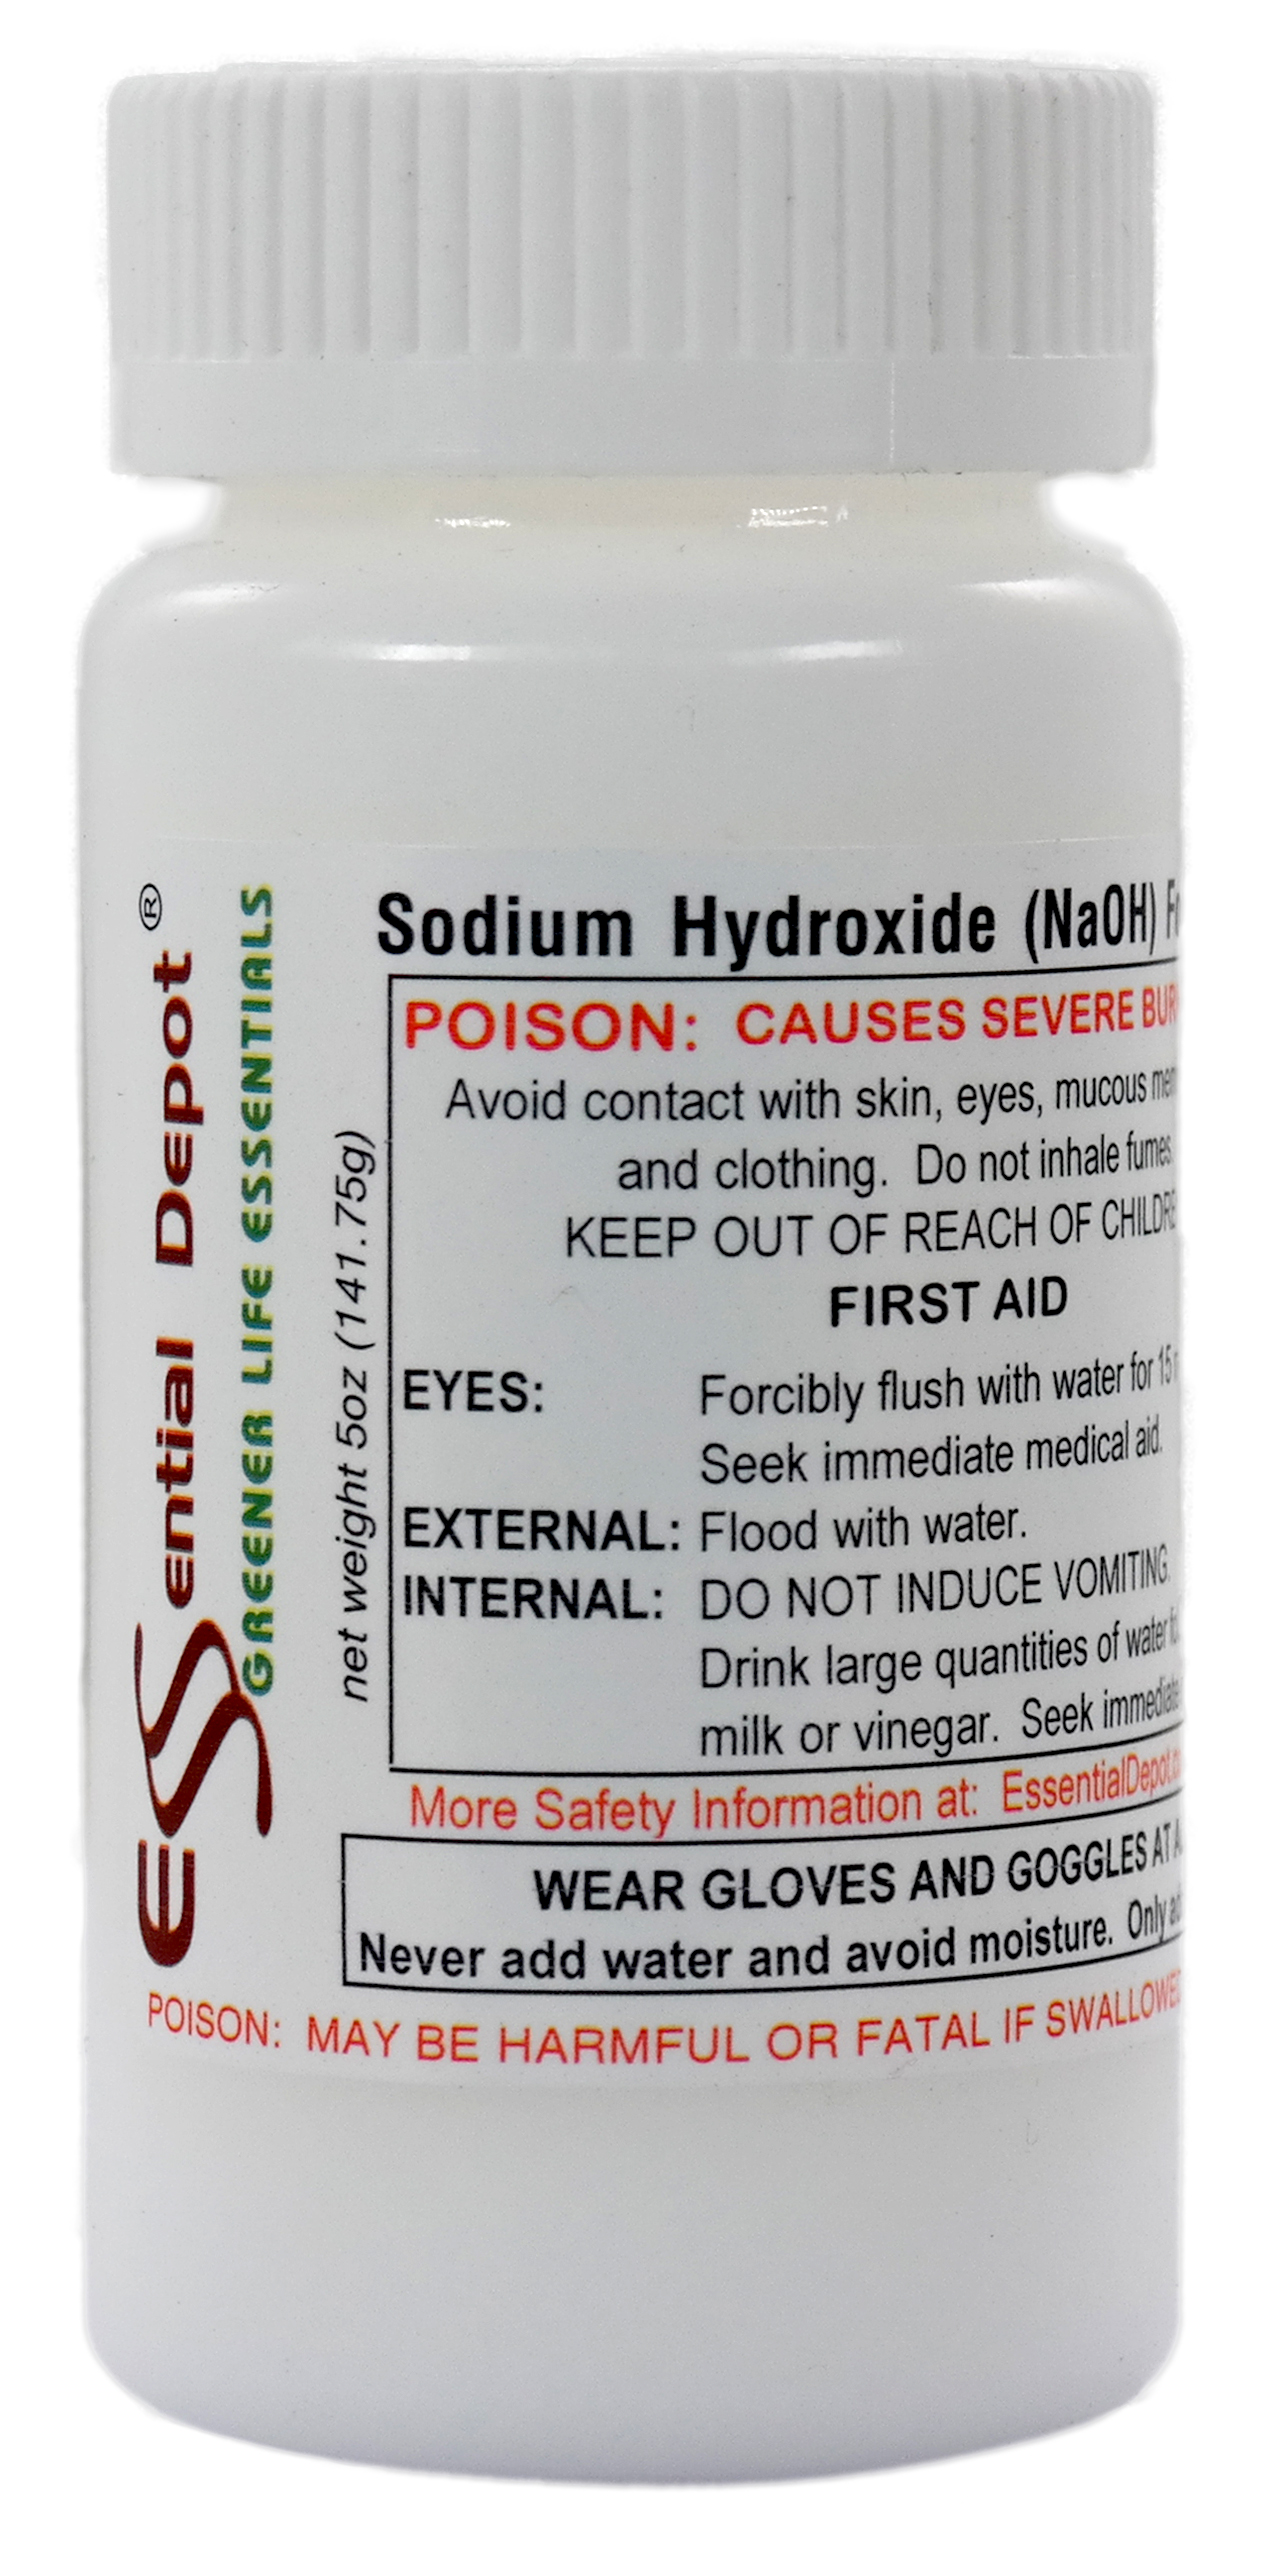 Sodium Hydroxide Lye Micro Beads - Food Grade - USP - 1 lb: Essential Depot